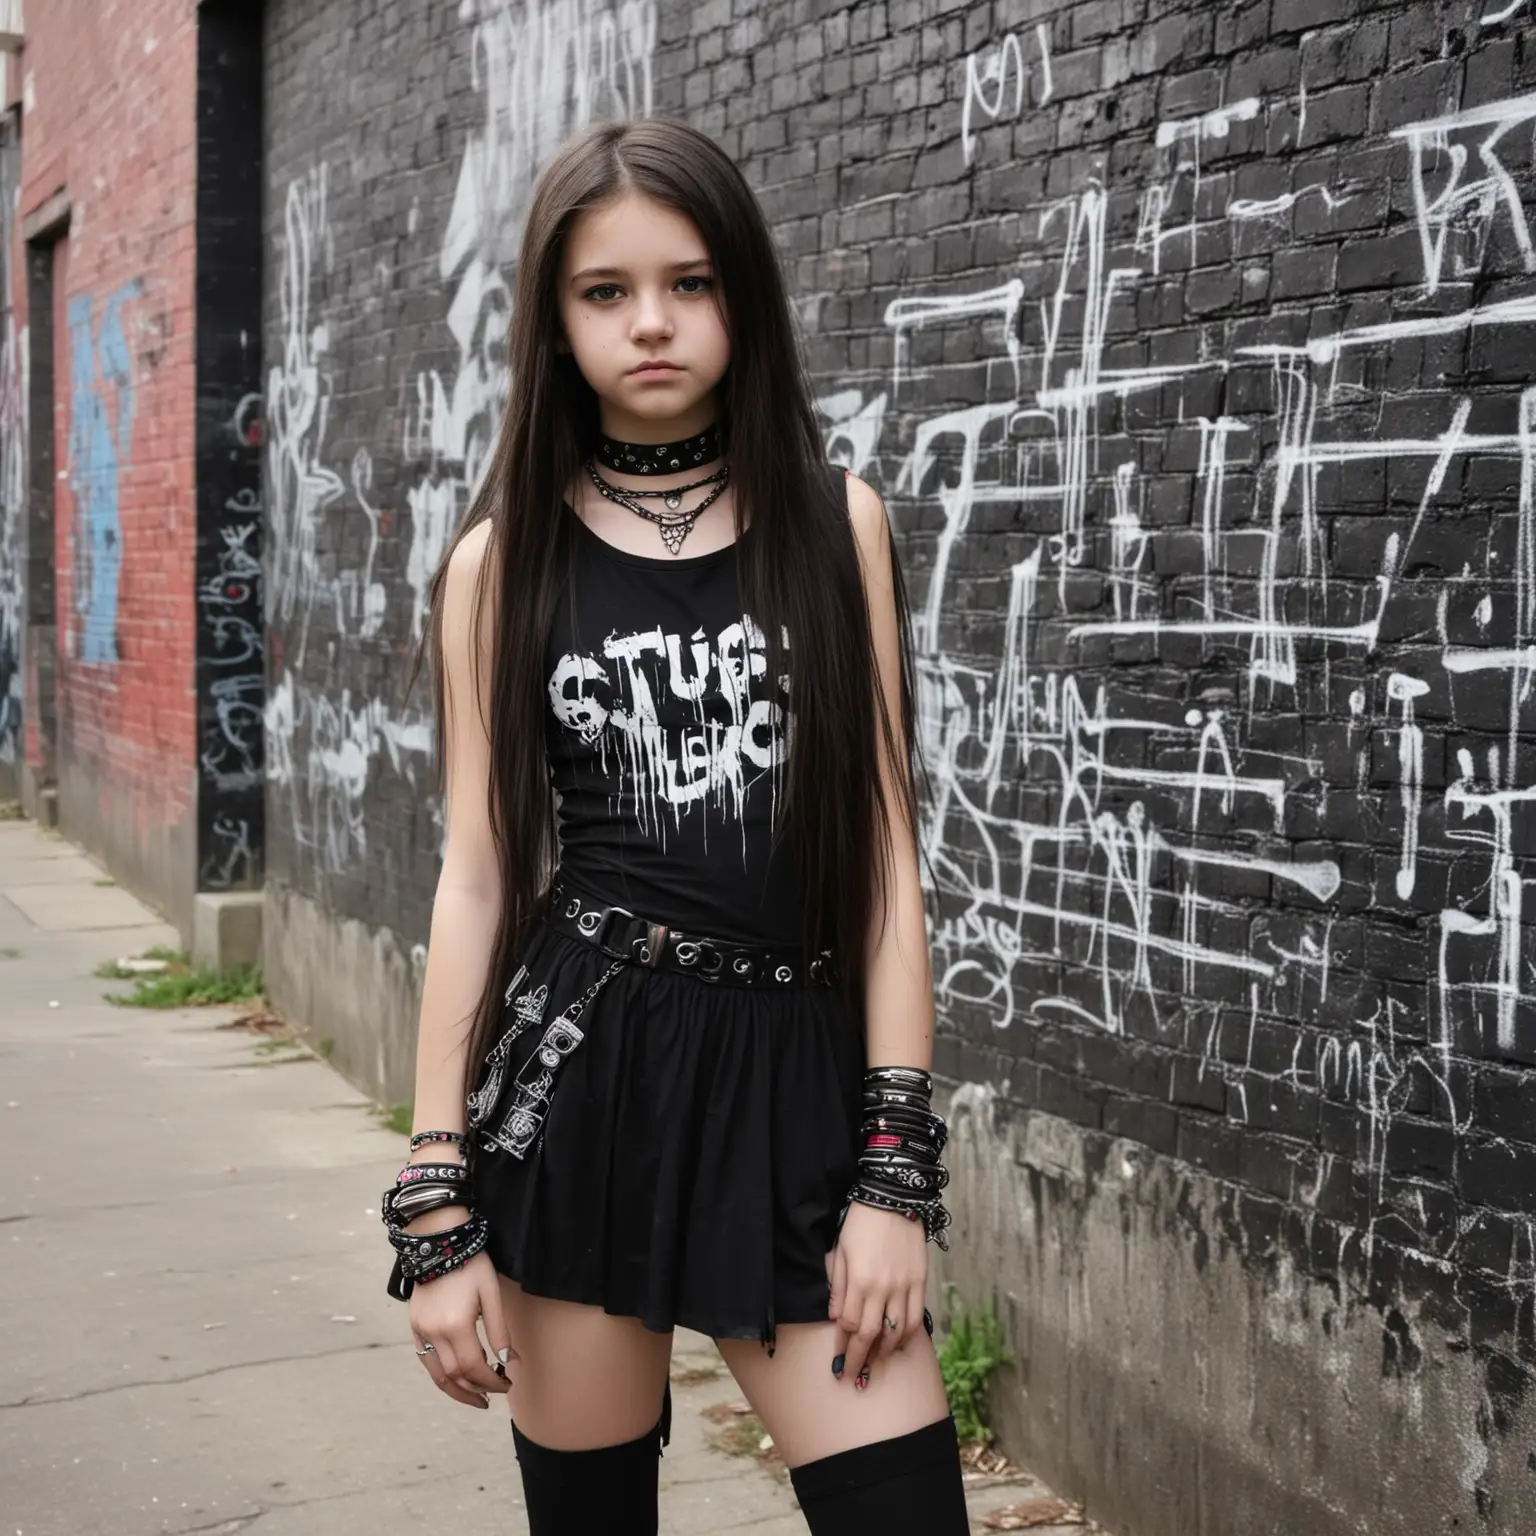 Teenage-Girl-in-Goth-Outfit-at-Urban-Graffiti-Scene